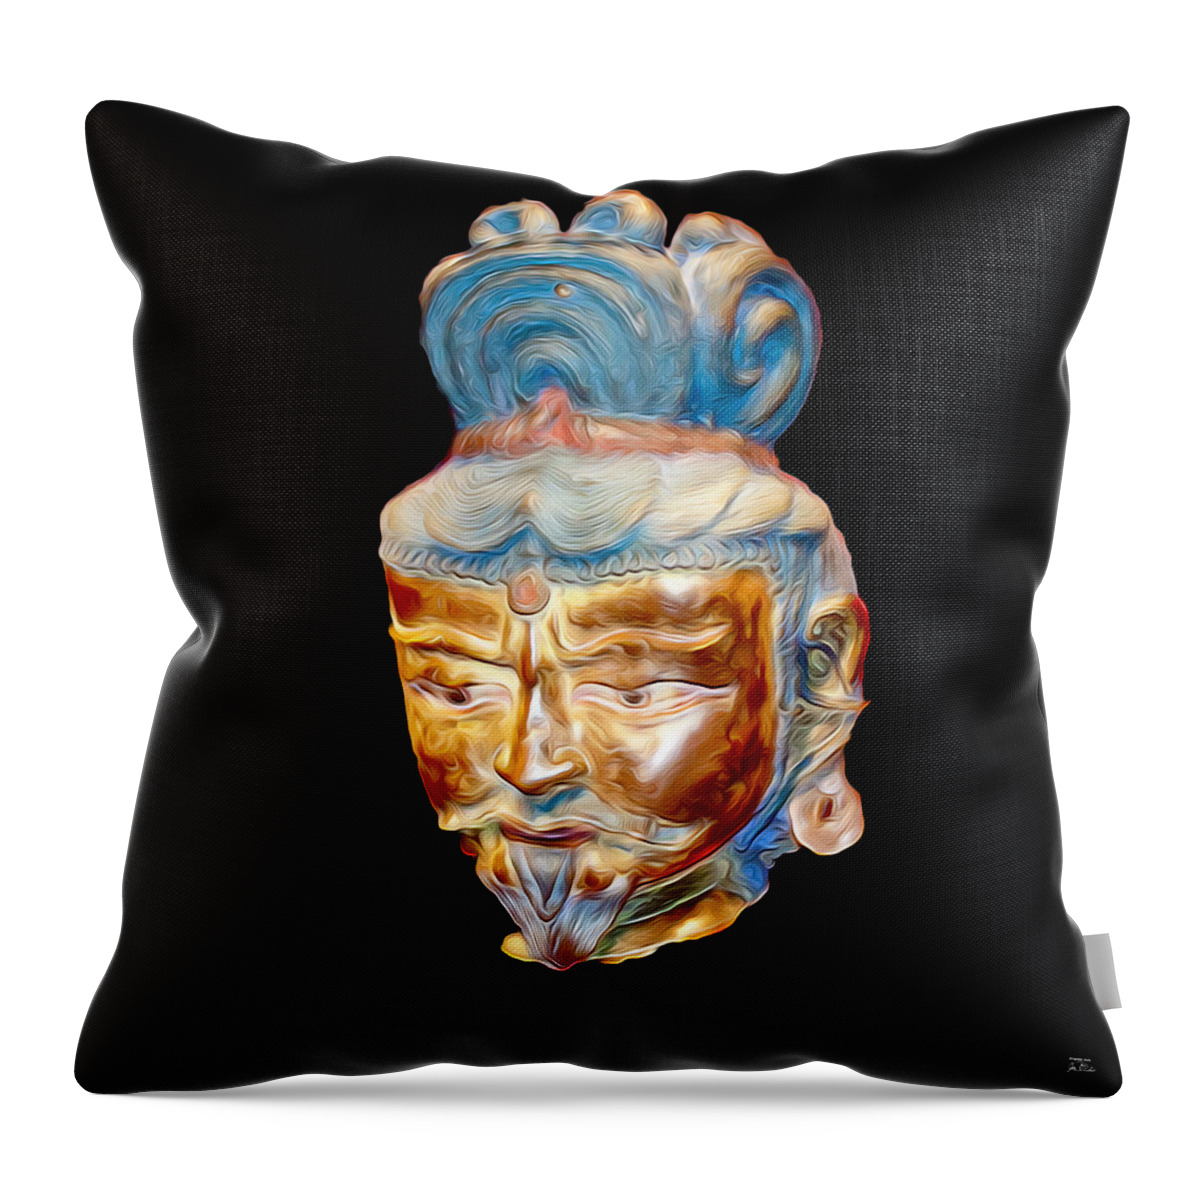 Asian Art Throw Pillow featuring the digital art Ancient Warlord by Joe Paradis